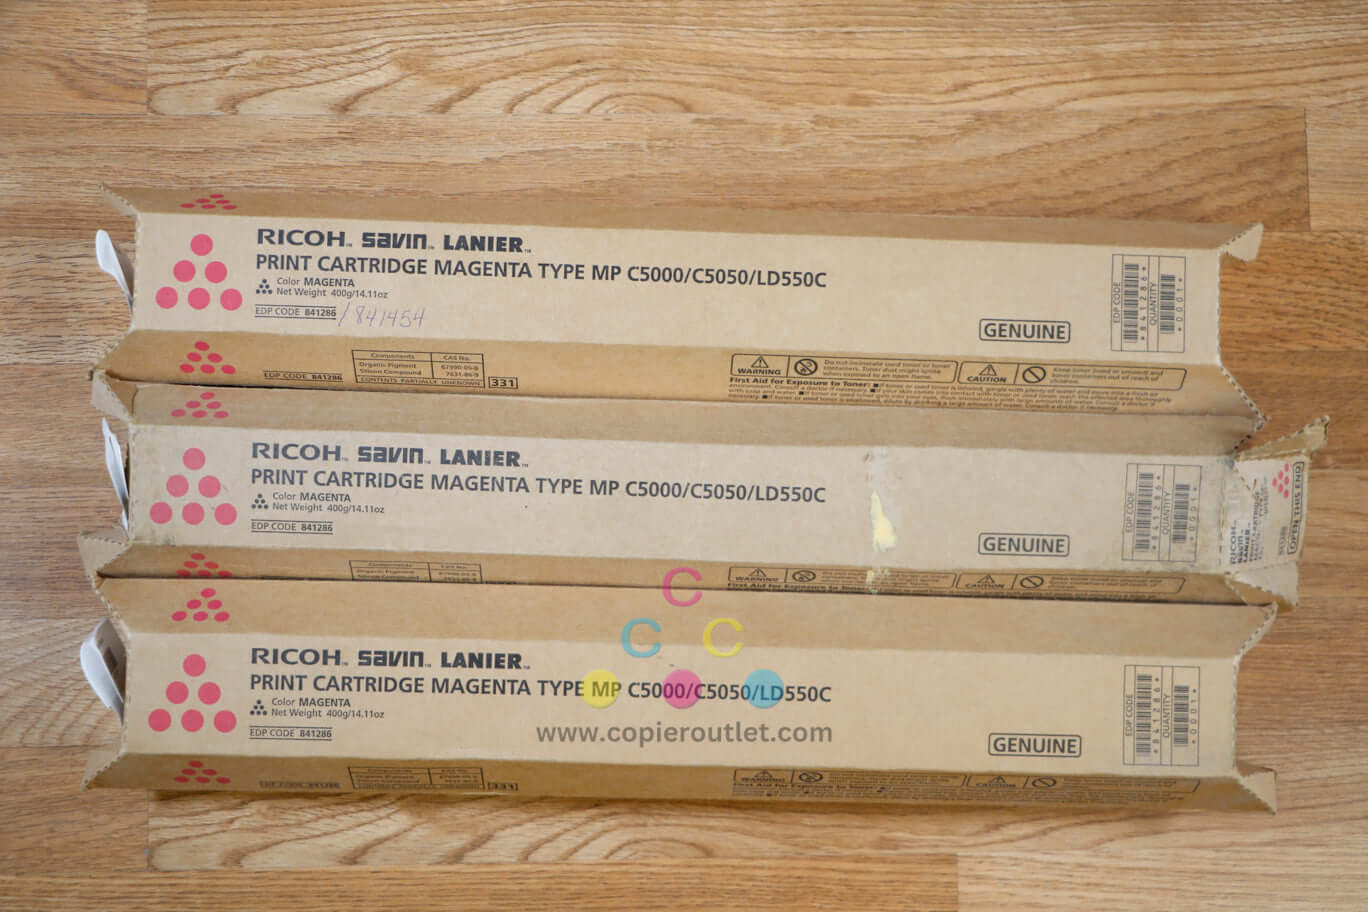 Lot of 3 Ricoh Savin Lanier 841286 Magenta Print Cartridge MP C5000 C5050 LD550C